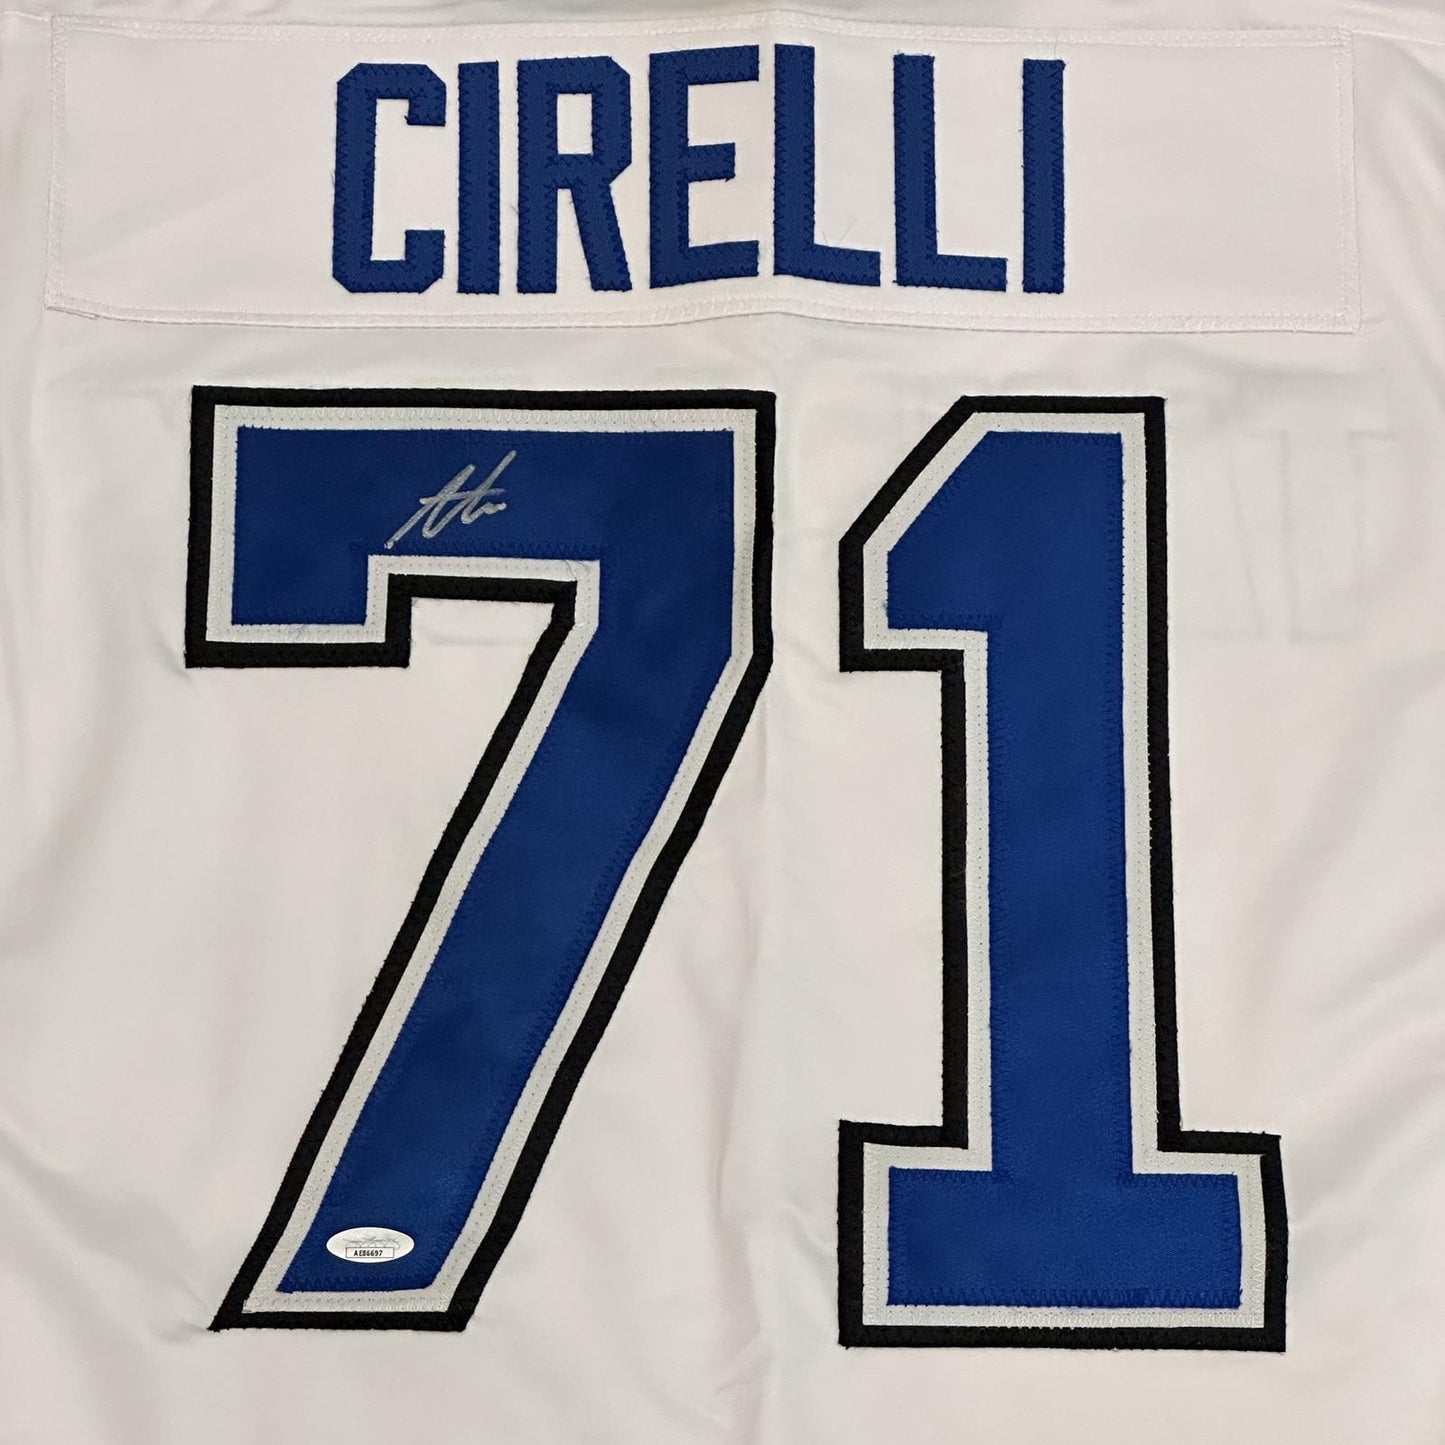 Anthony Cirelli Autographed Tampa Bay (White #71) Custom Hockey Jersey - JSA